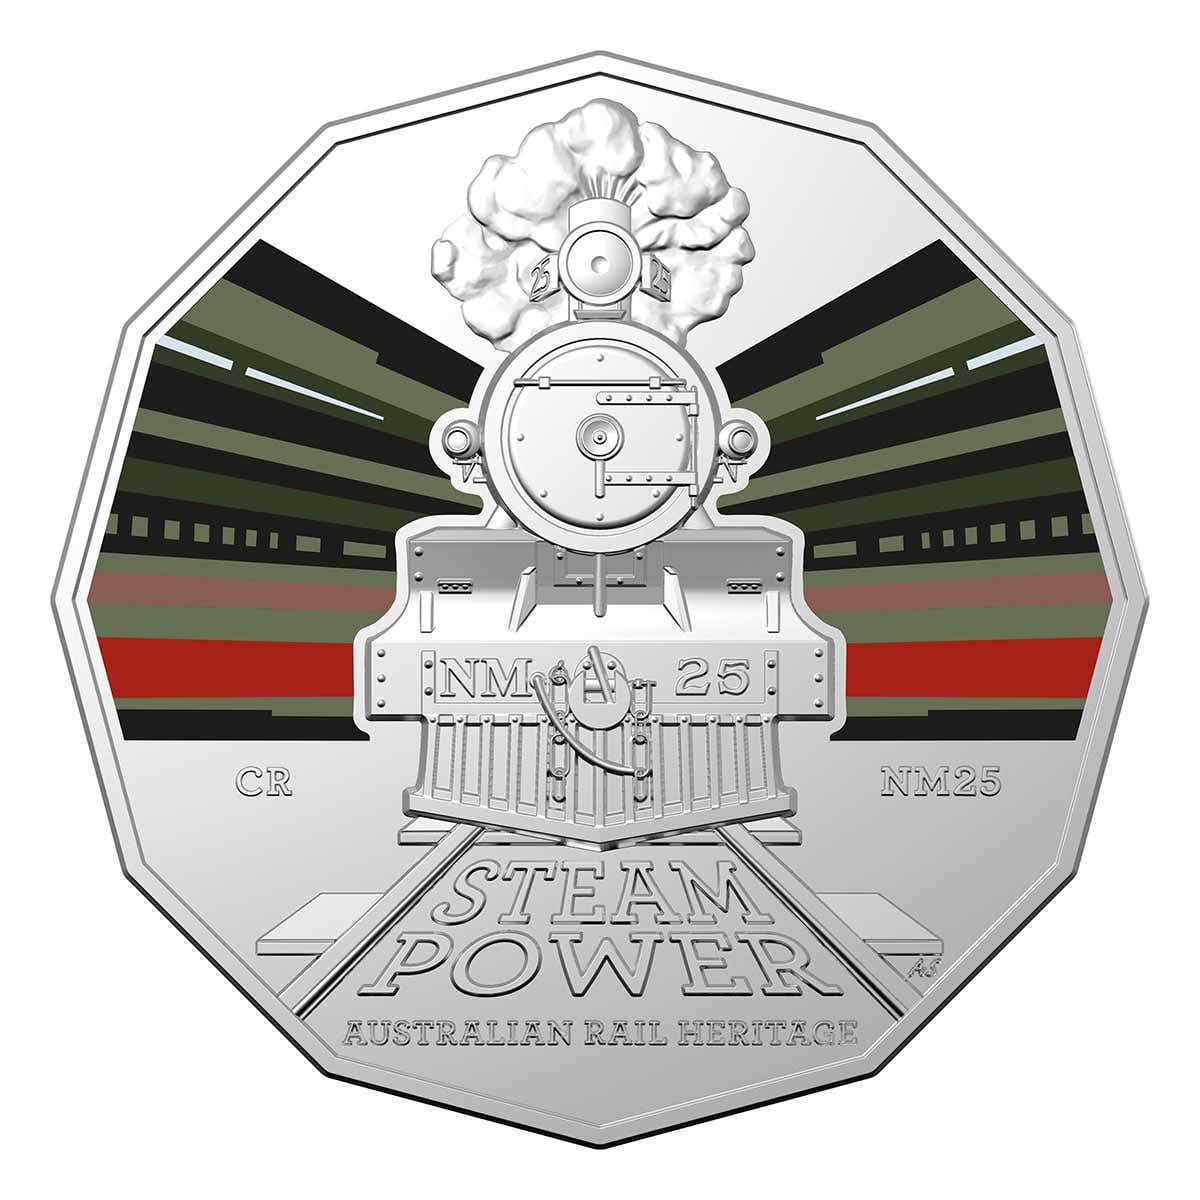 Australian Steam Trains Commonwealth NM 25d 2022 50c Coloured CuNi Uncirculated Coin